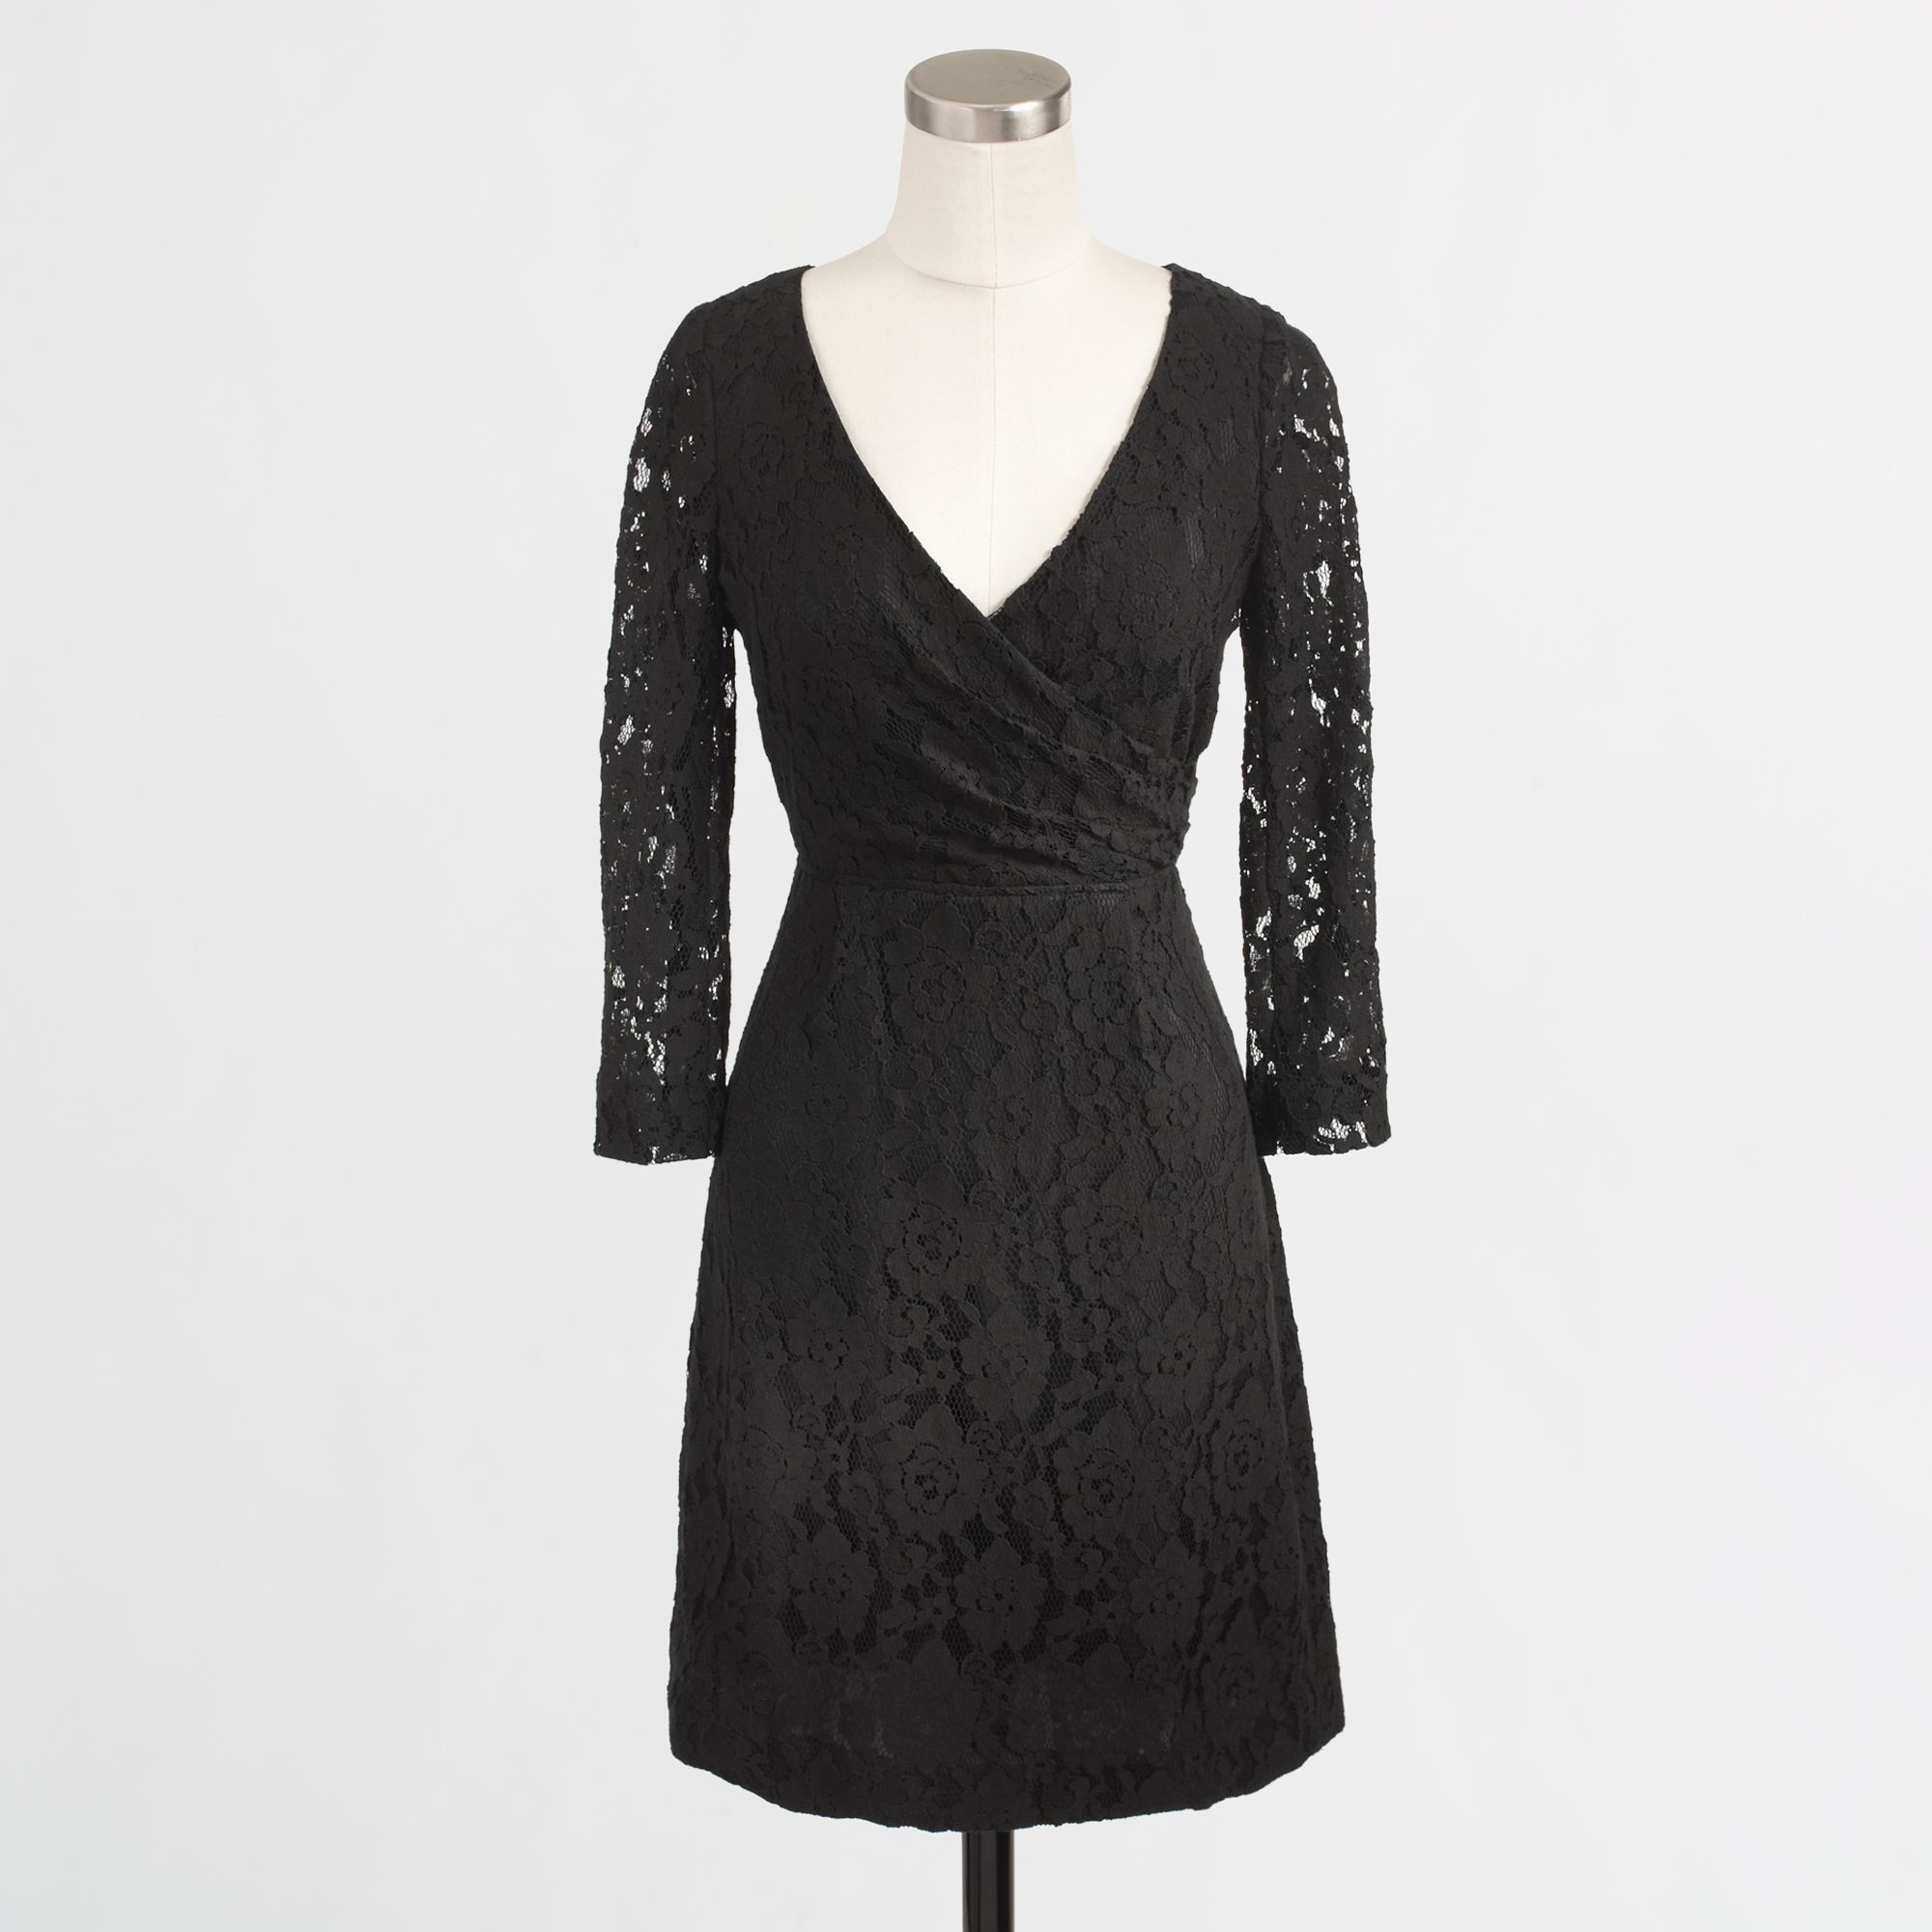 Lyst - J.Crew Factory Floral Lace V-neck Dress in Black